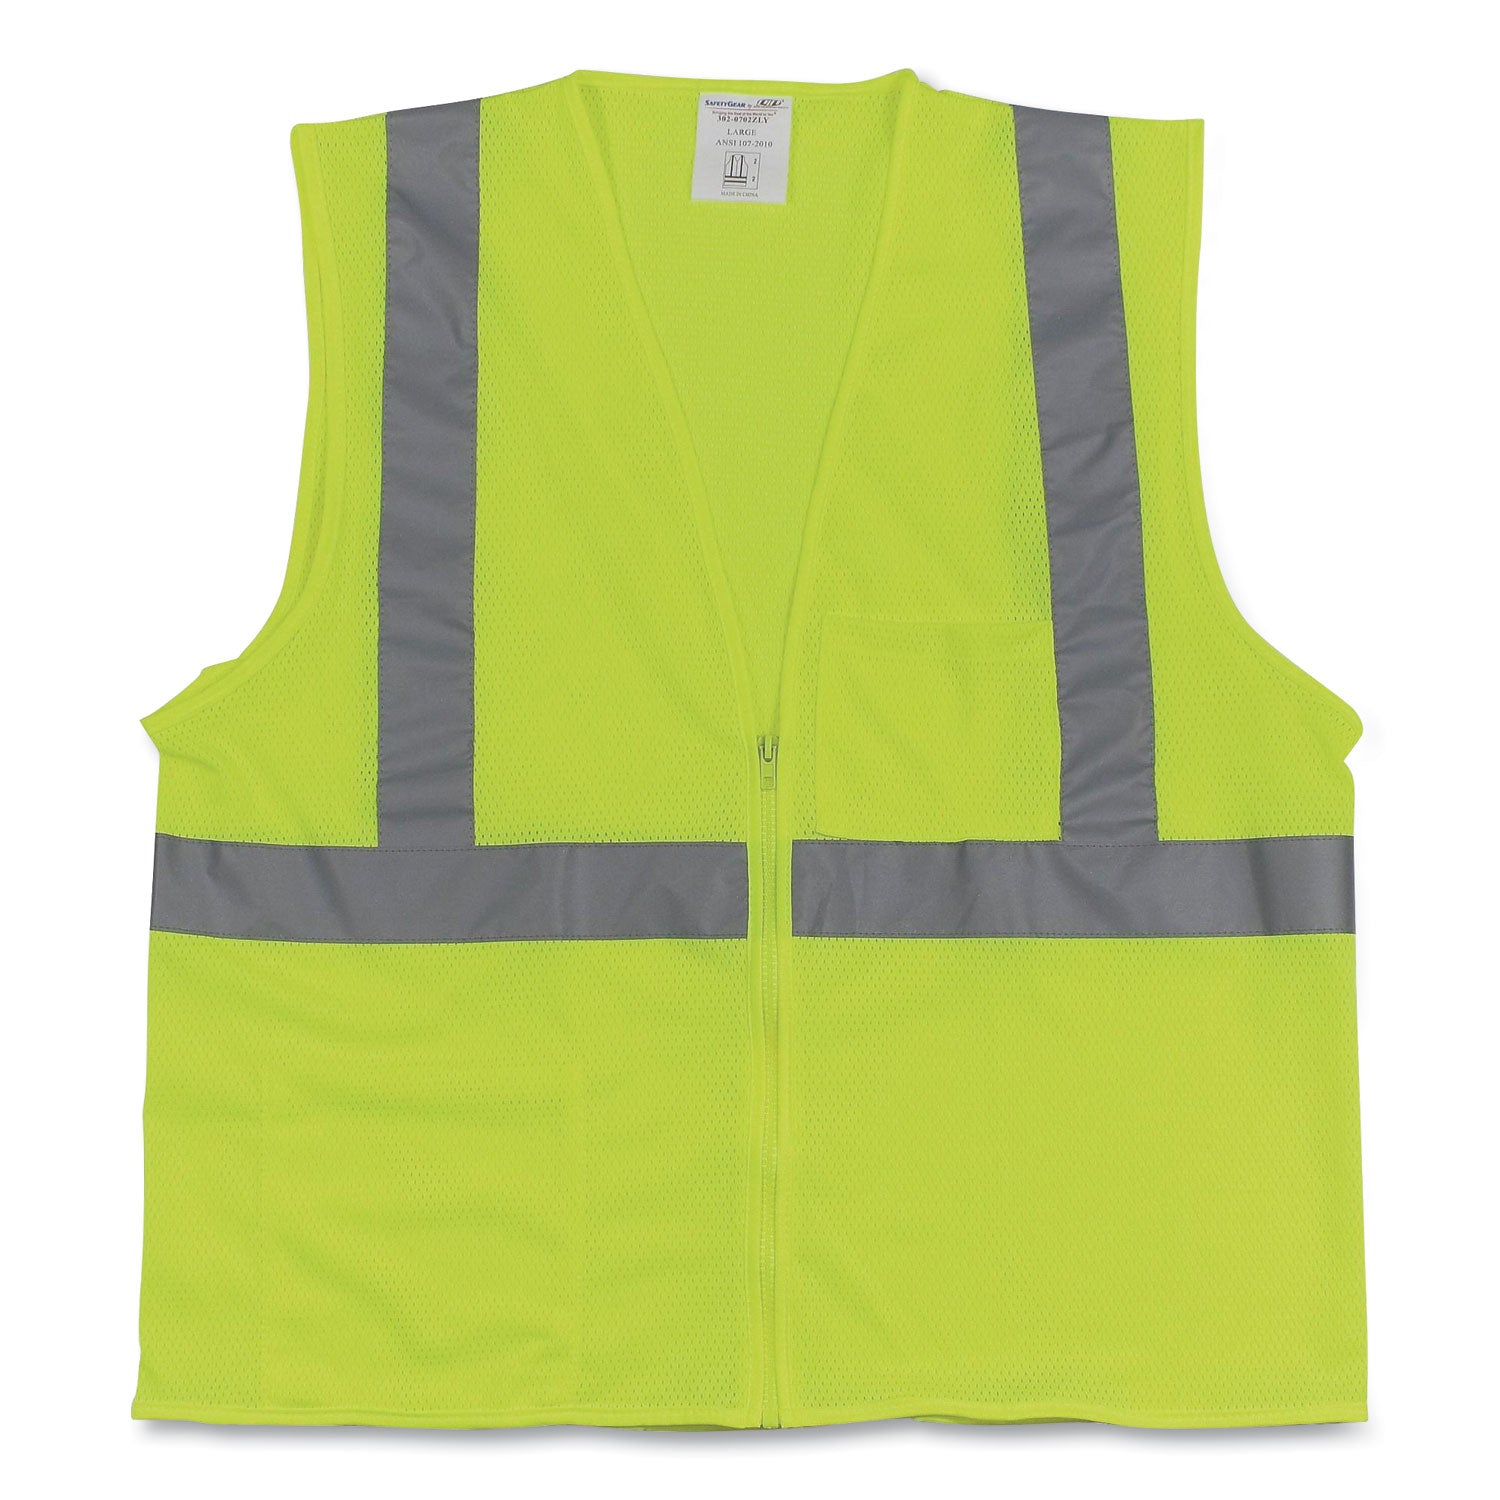 ansi-class-2-two-pocket-zipper-mesh-safety-vest-large-hi-viz-lime-yellow_pid3020702zlyl - 1